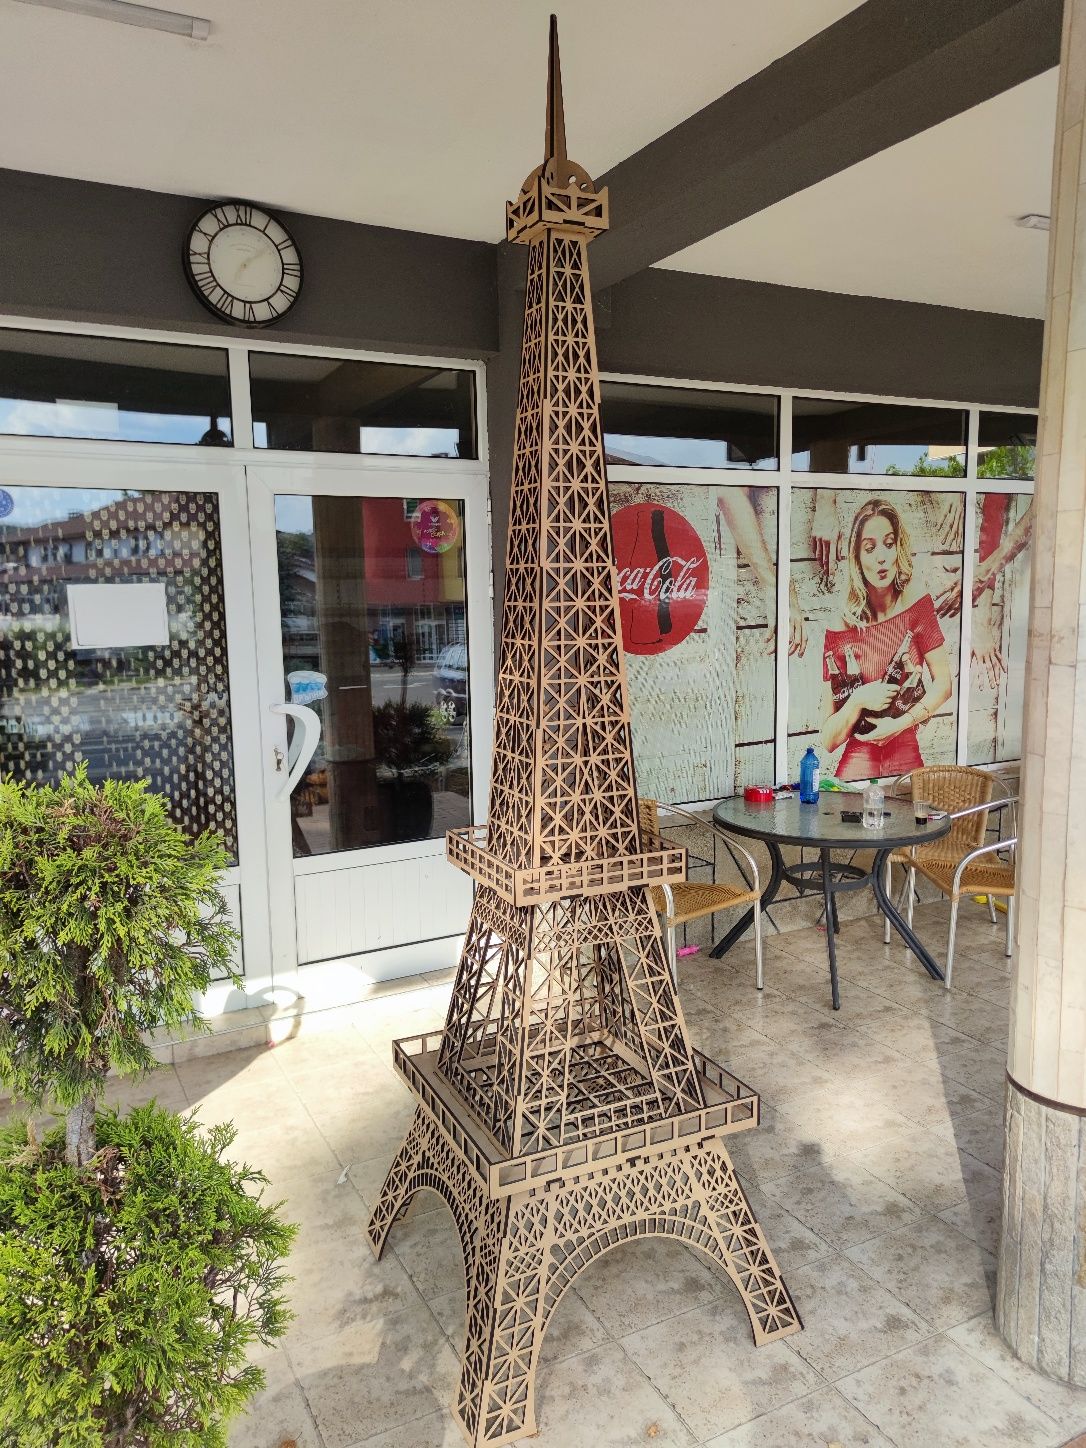 Айфеловата кула Eiffel tower Decor Пъзел 3D